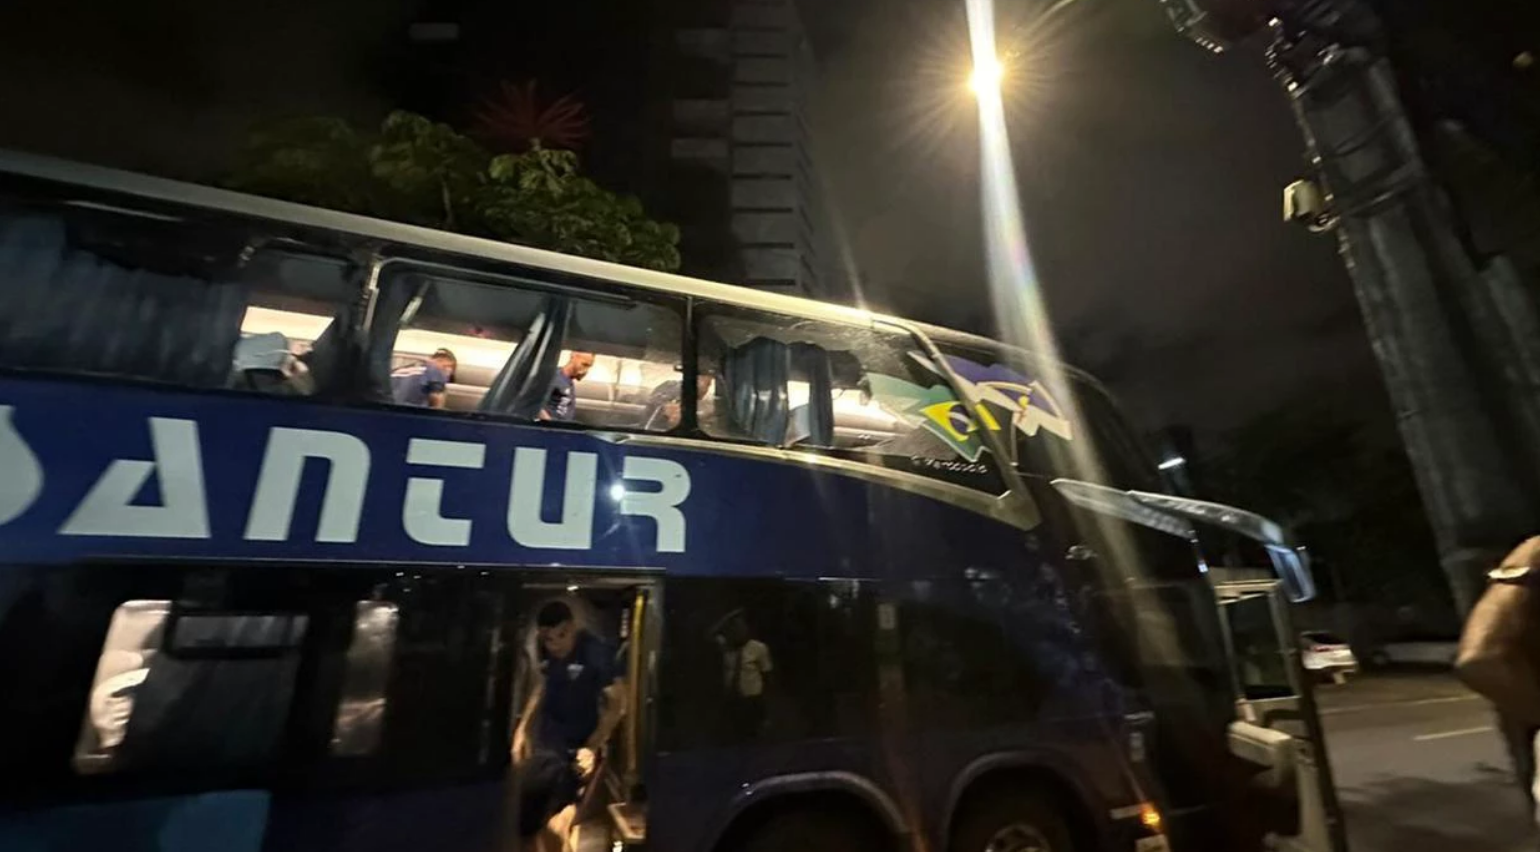 Ônibus do Fortaleza após ser atacado (Foto: Matheus Amorim/Fortaleza EC)